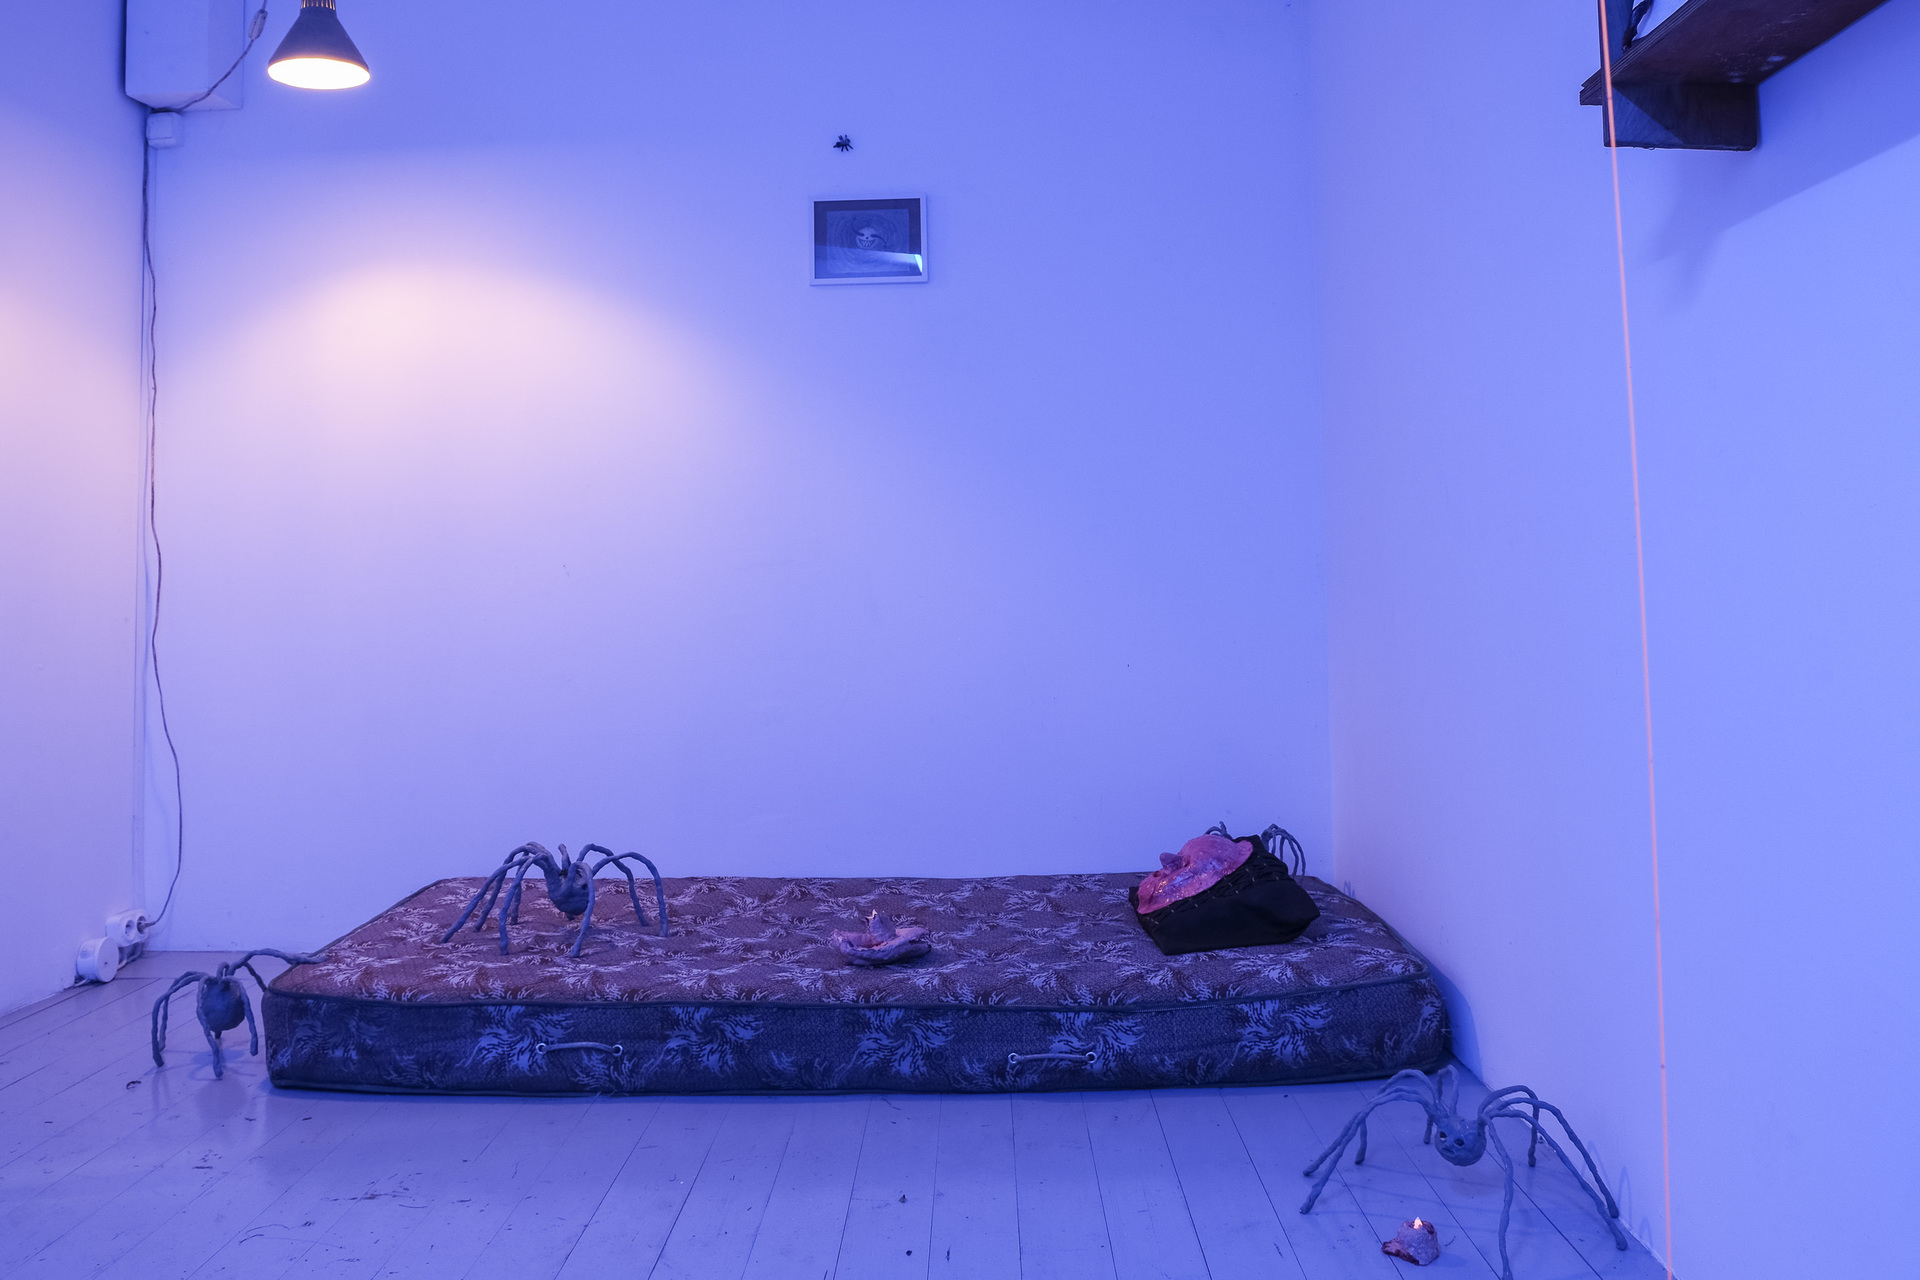 Rafał Żarski,Spider feast 2020, indoor view, left wall, installation, mix media